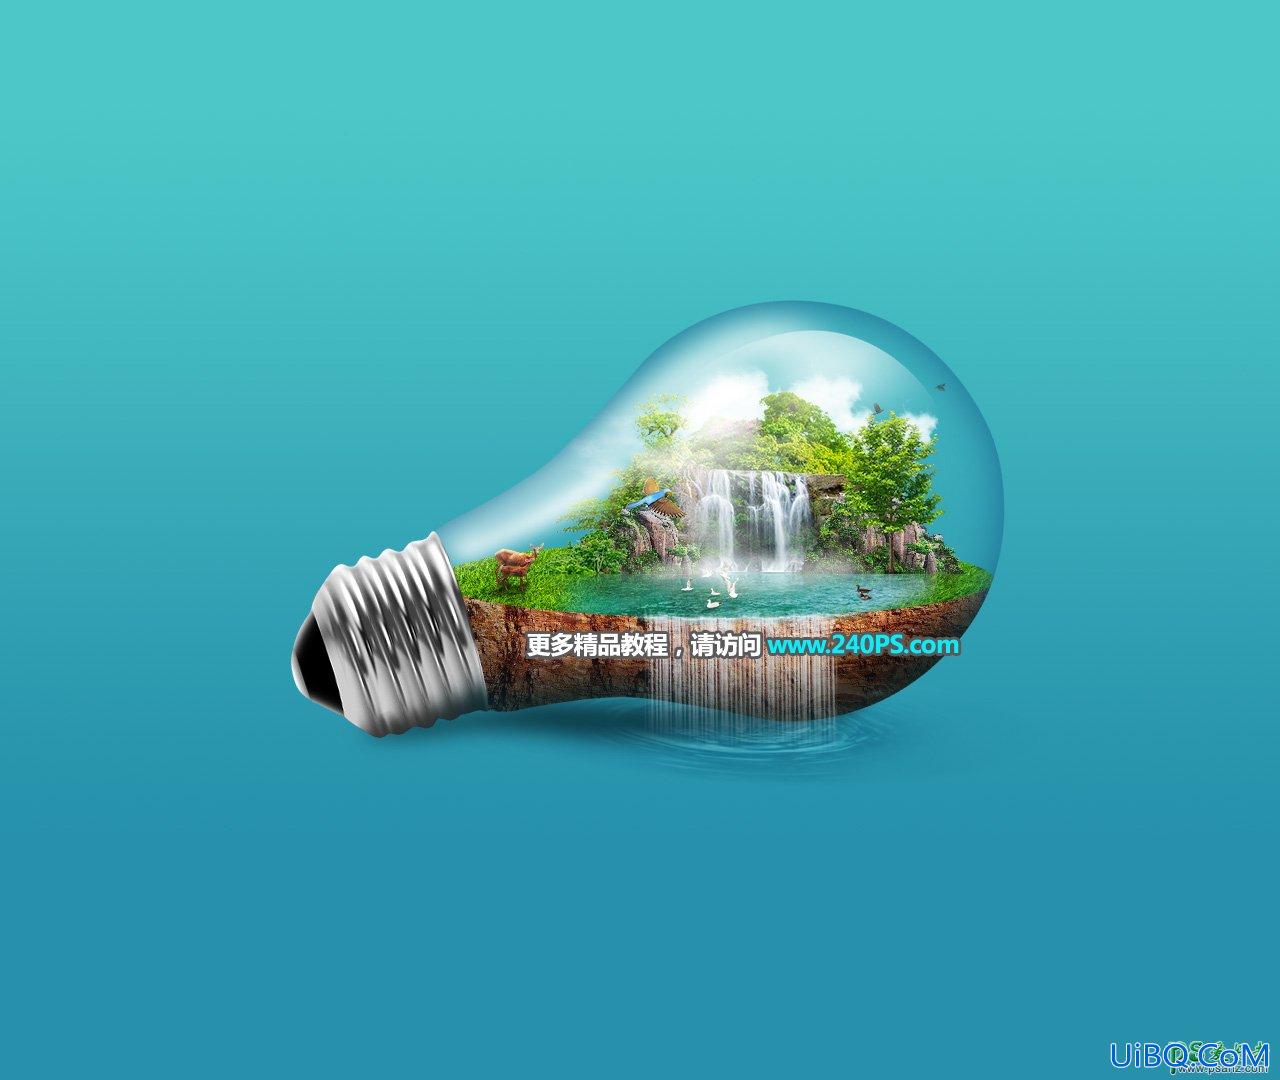 PS创意合成在灯泡中呈现出的唯美山水瀑布场景图片。